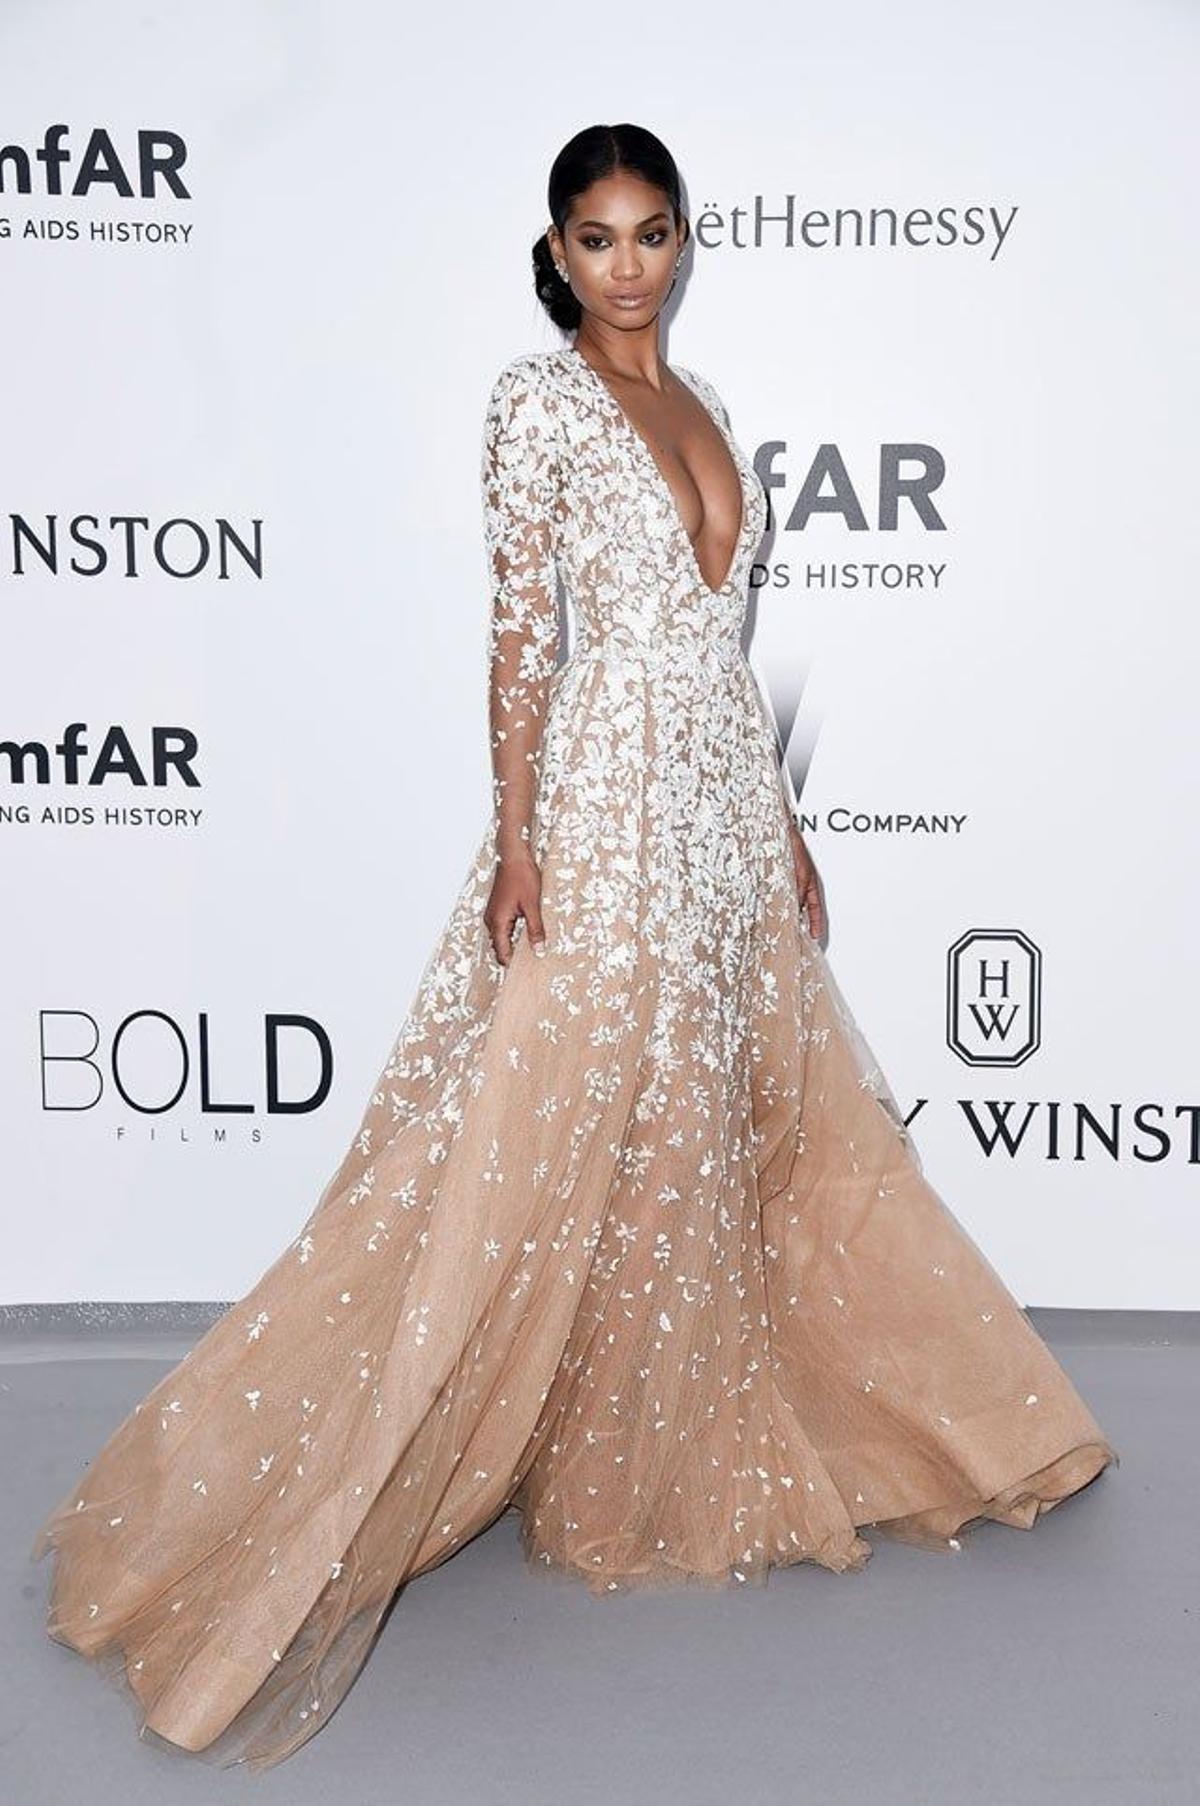 Chanel Iman en la gala amFAR de Cannes 2015